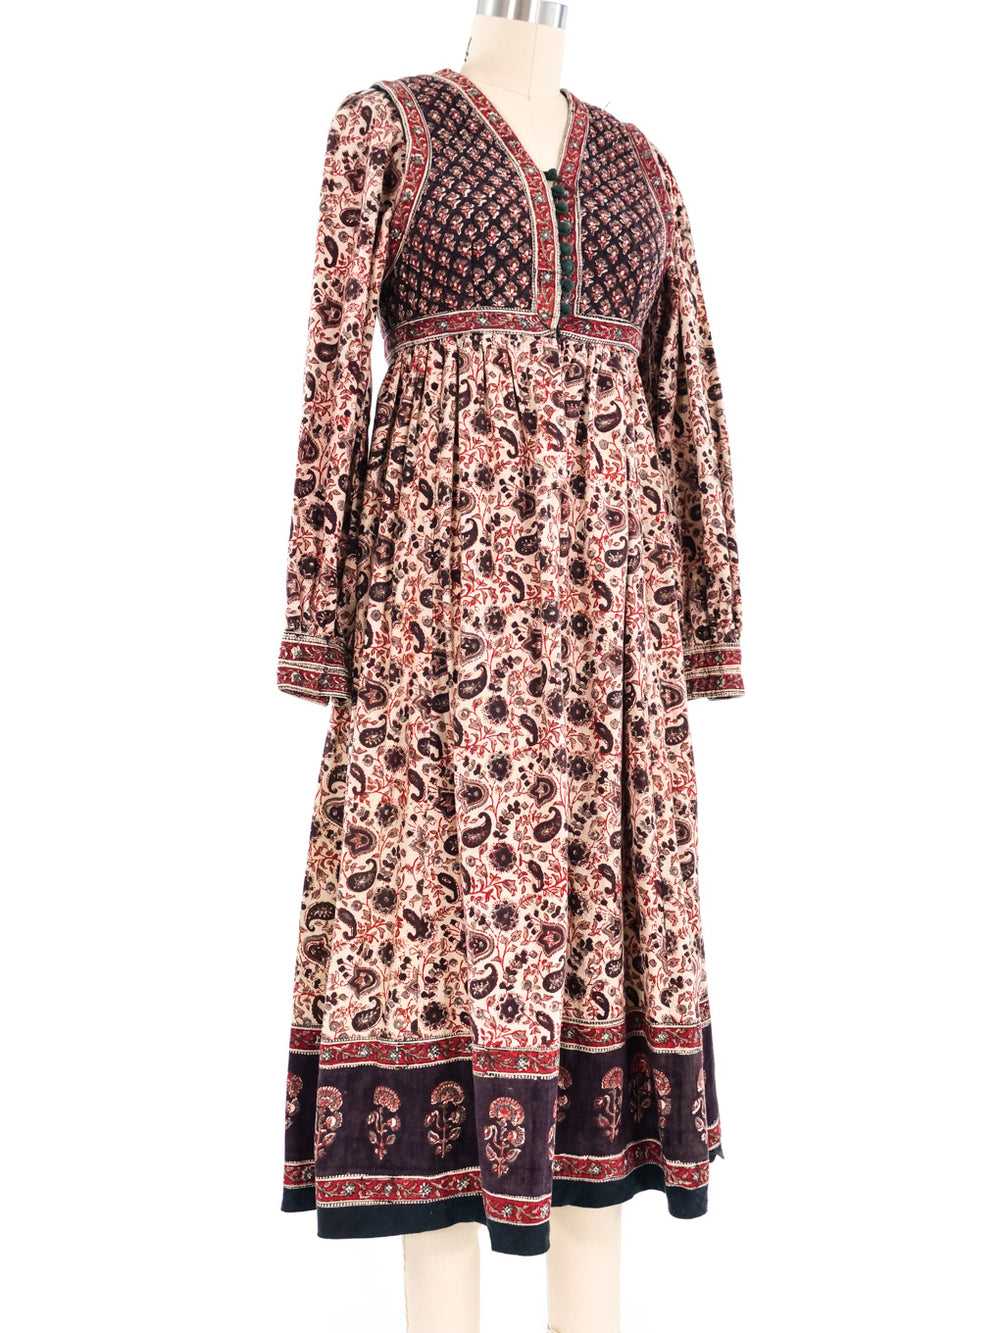 Block Printed Cotton Indian Dress - image 3